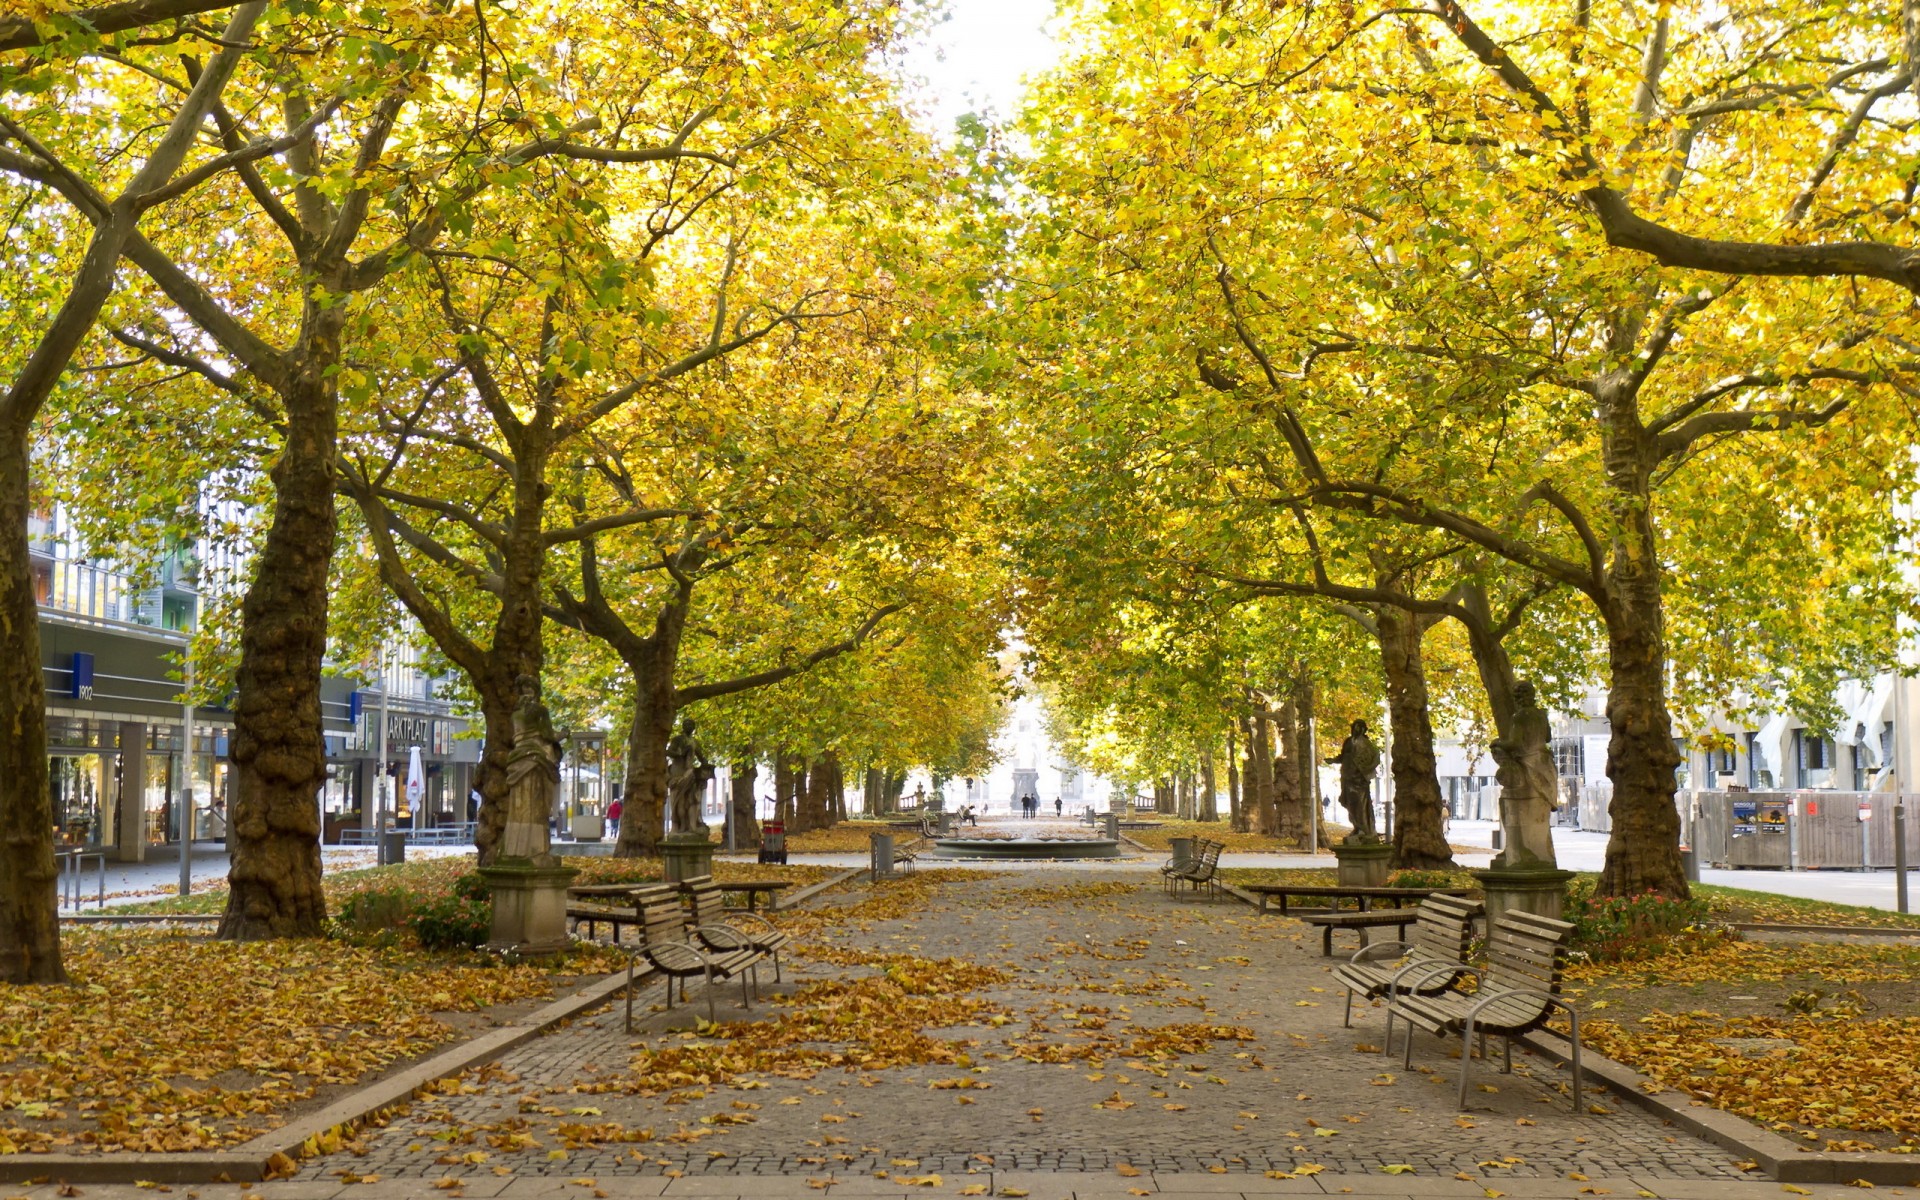 Sidewalk park statue sidewalk bench trees leaves autumn fall cities ...